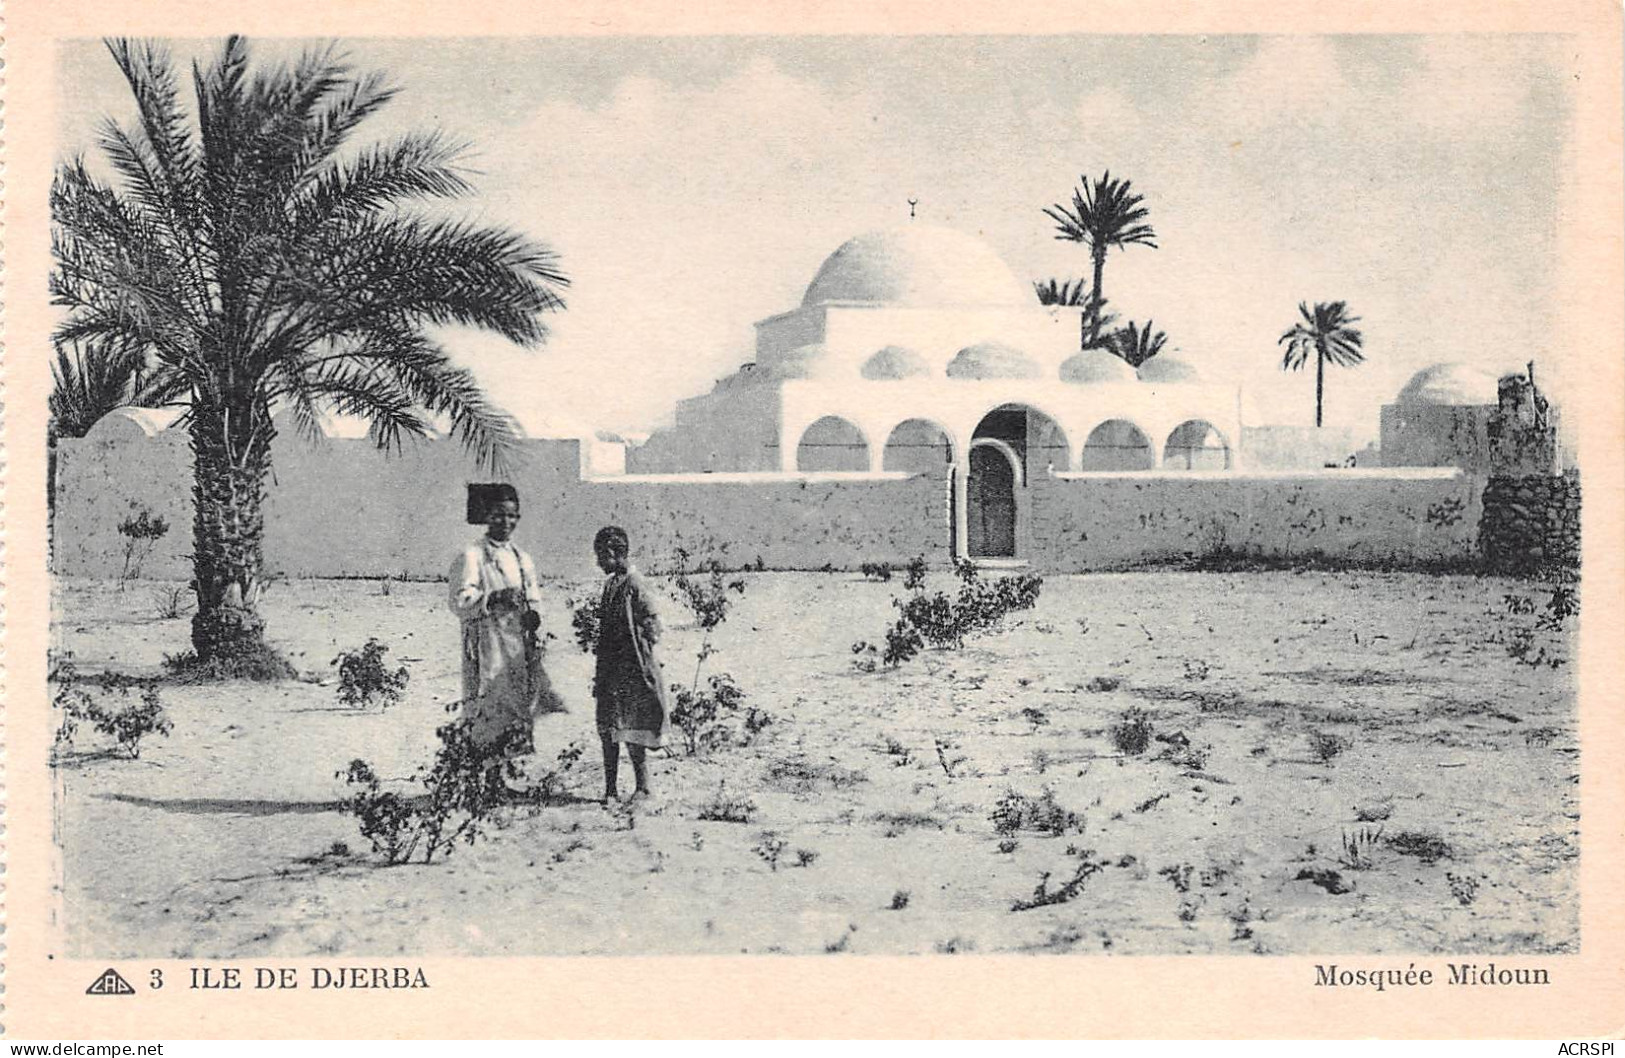 TUNISIE DJERBA La Mosquée à MIDOUN édition Anan-Turki Carte Vierge  (Scan R/V) N° 65 \MP7170 - Tunesië